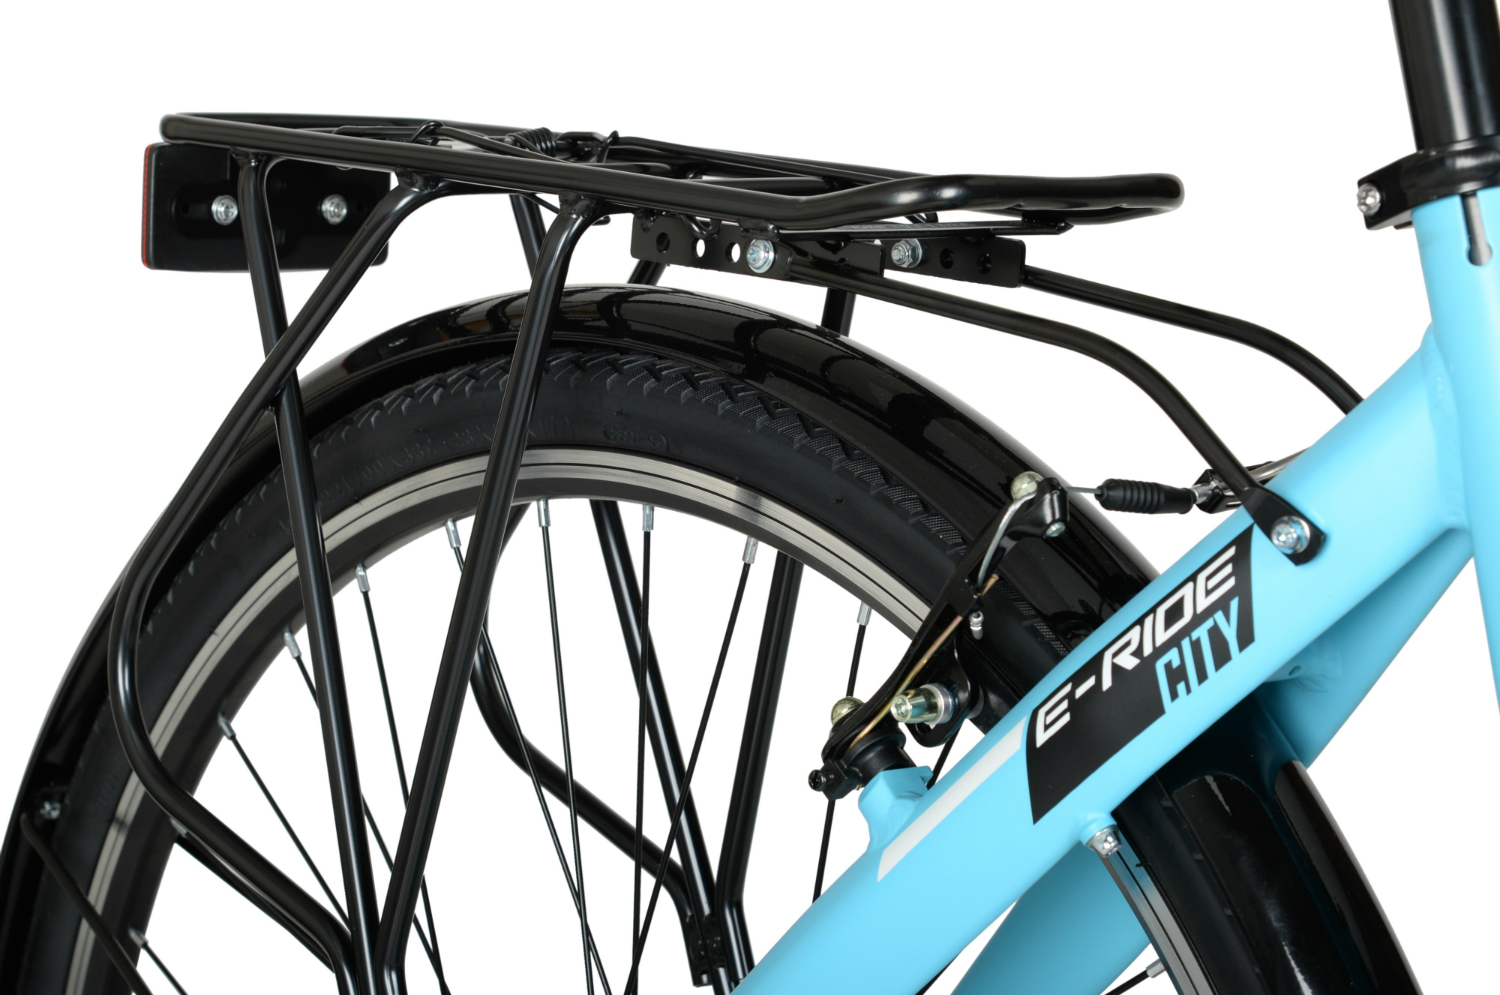 walmart slashes prices on hyper e ride electric hybrid bikes blue bike 700c wheels 08